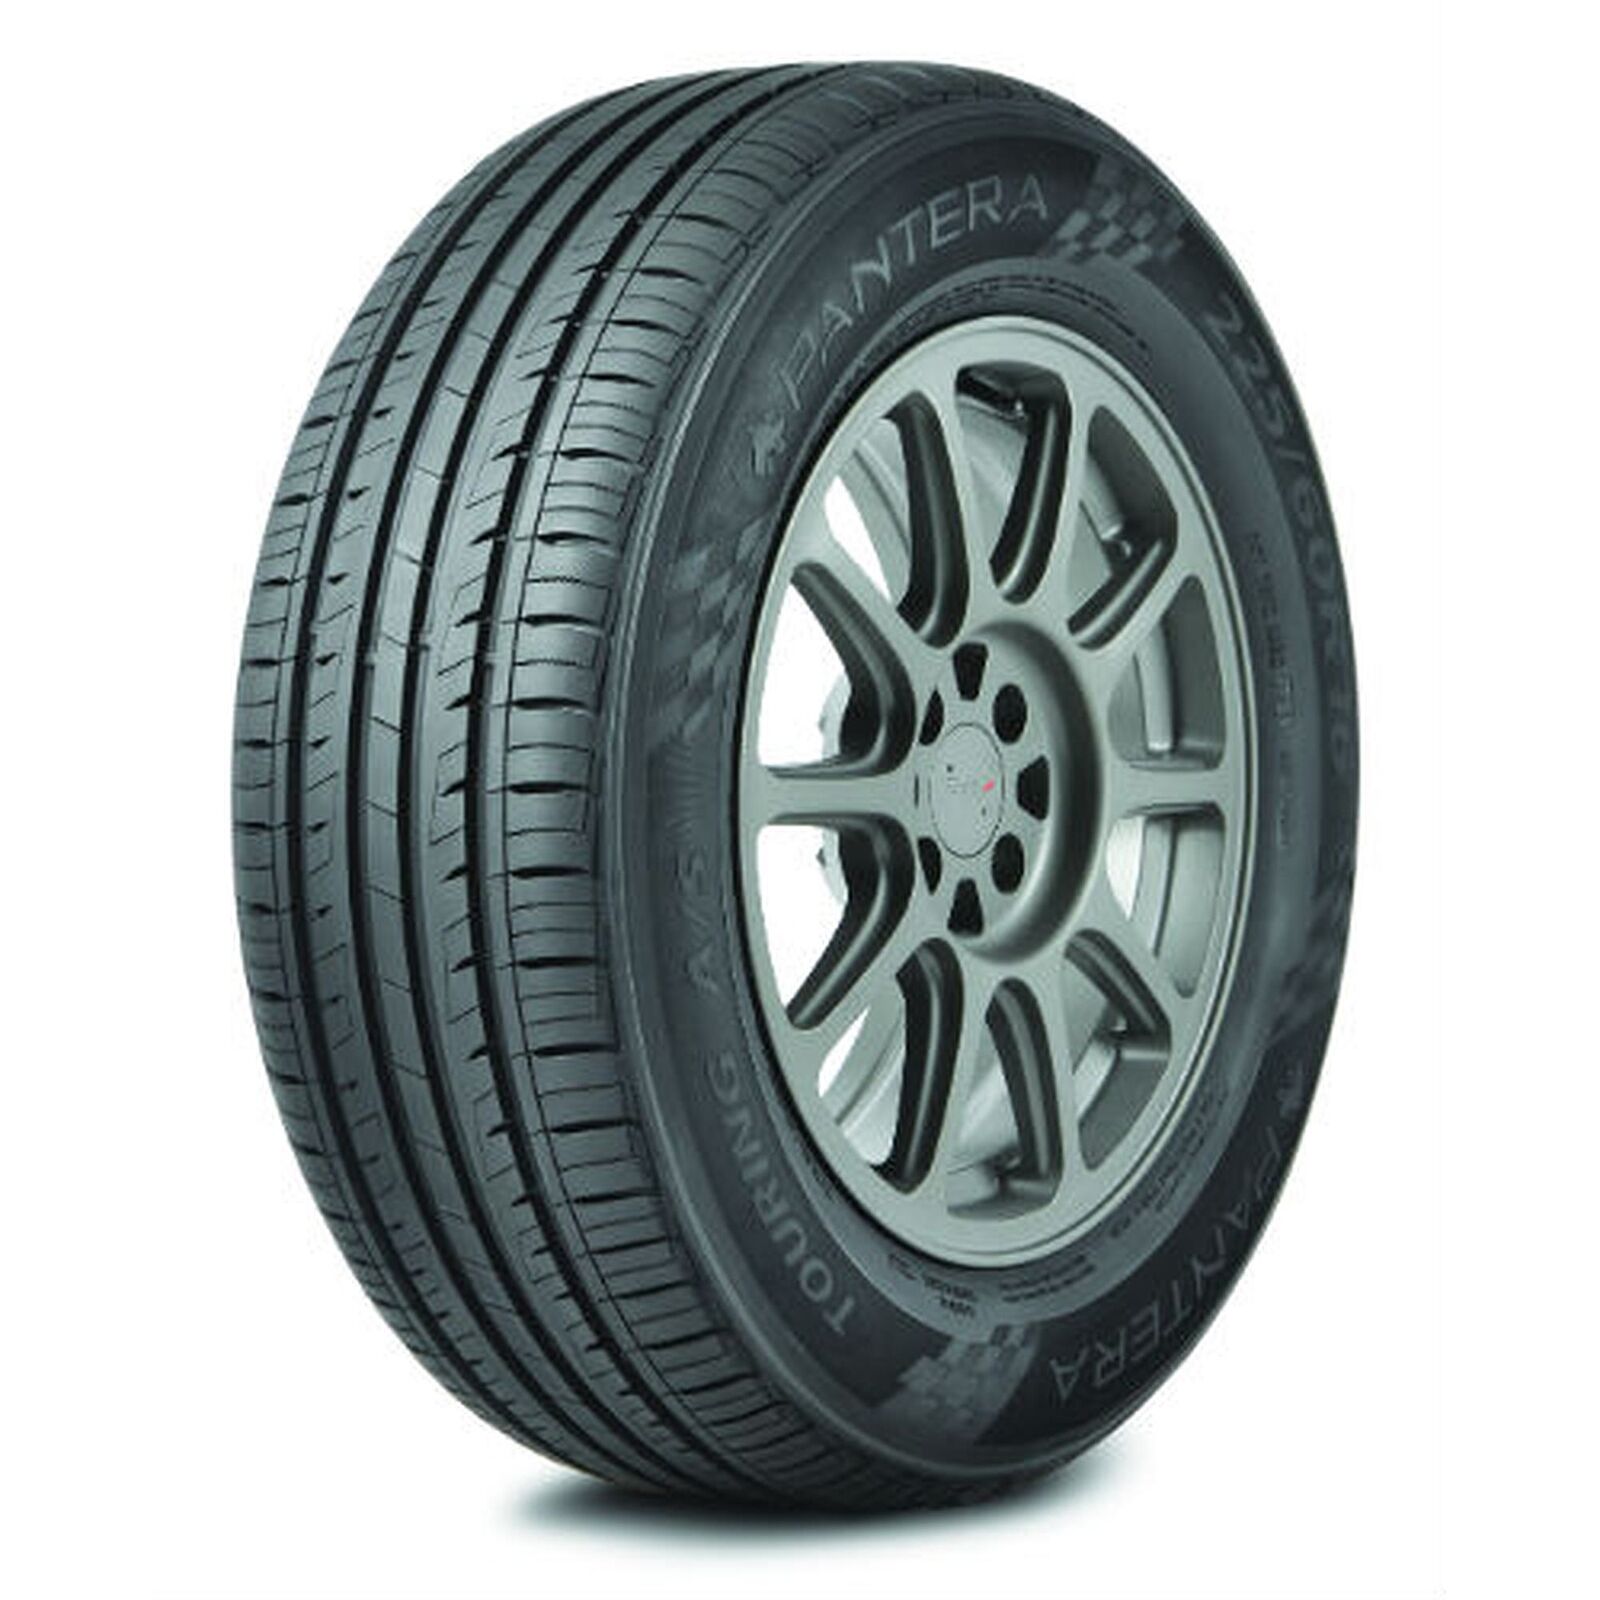 1 New Pantera Touring A/s  - 245/60r18 Tires 2456018 245 60 18